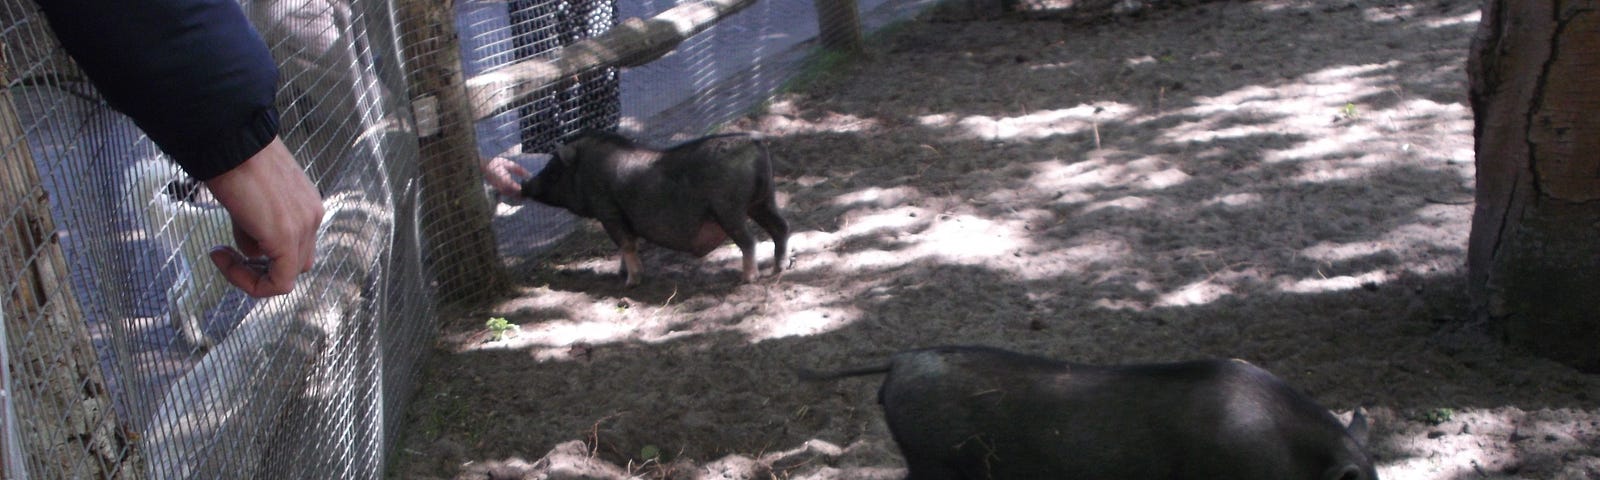 Pigs at the Keukenhof Gardens, Lisse, Netherlands